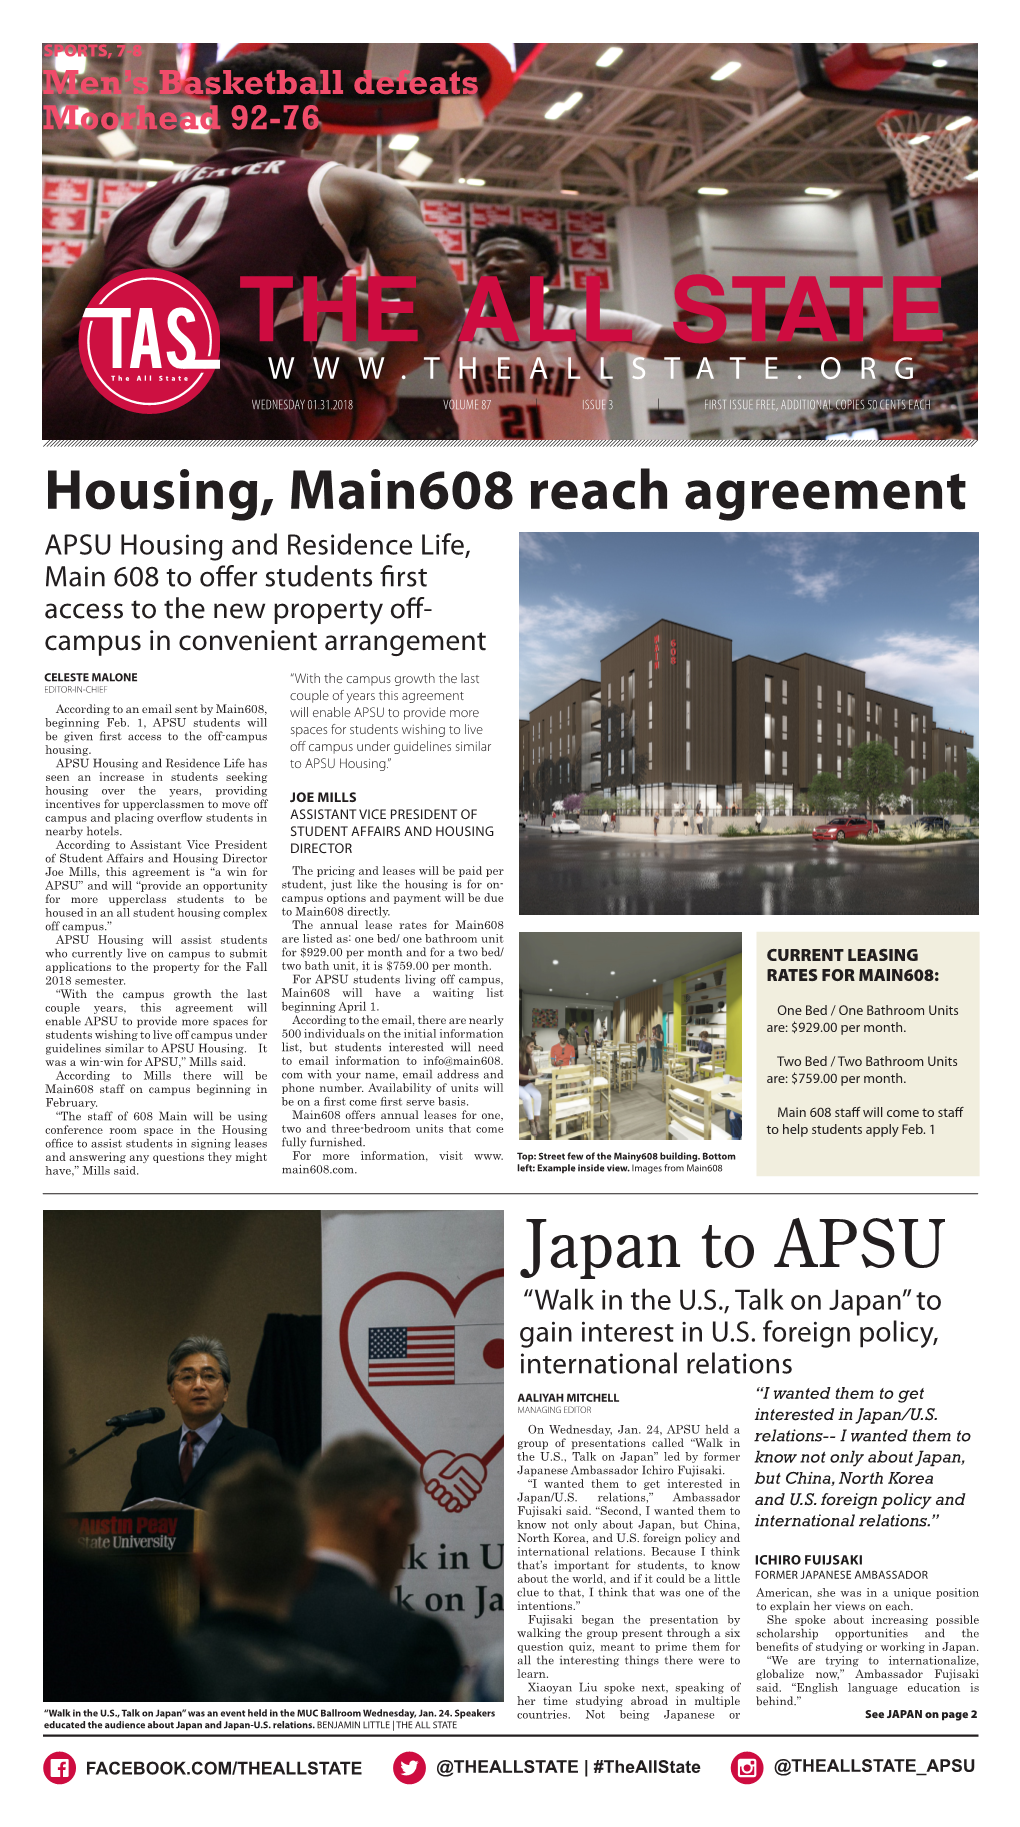 Japan to APSU “Walk in the U.S., Talk on Japan” to Gain Interest in U.S